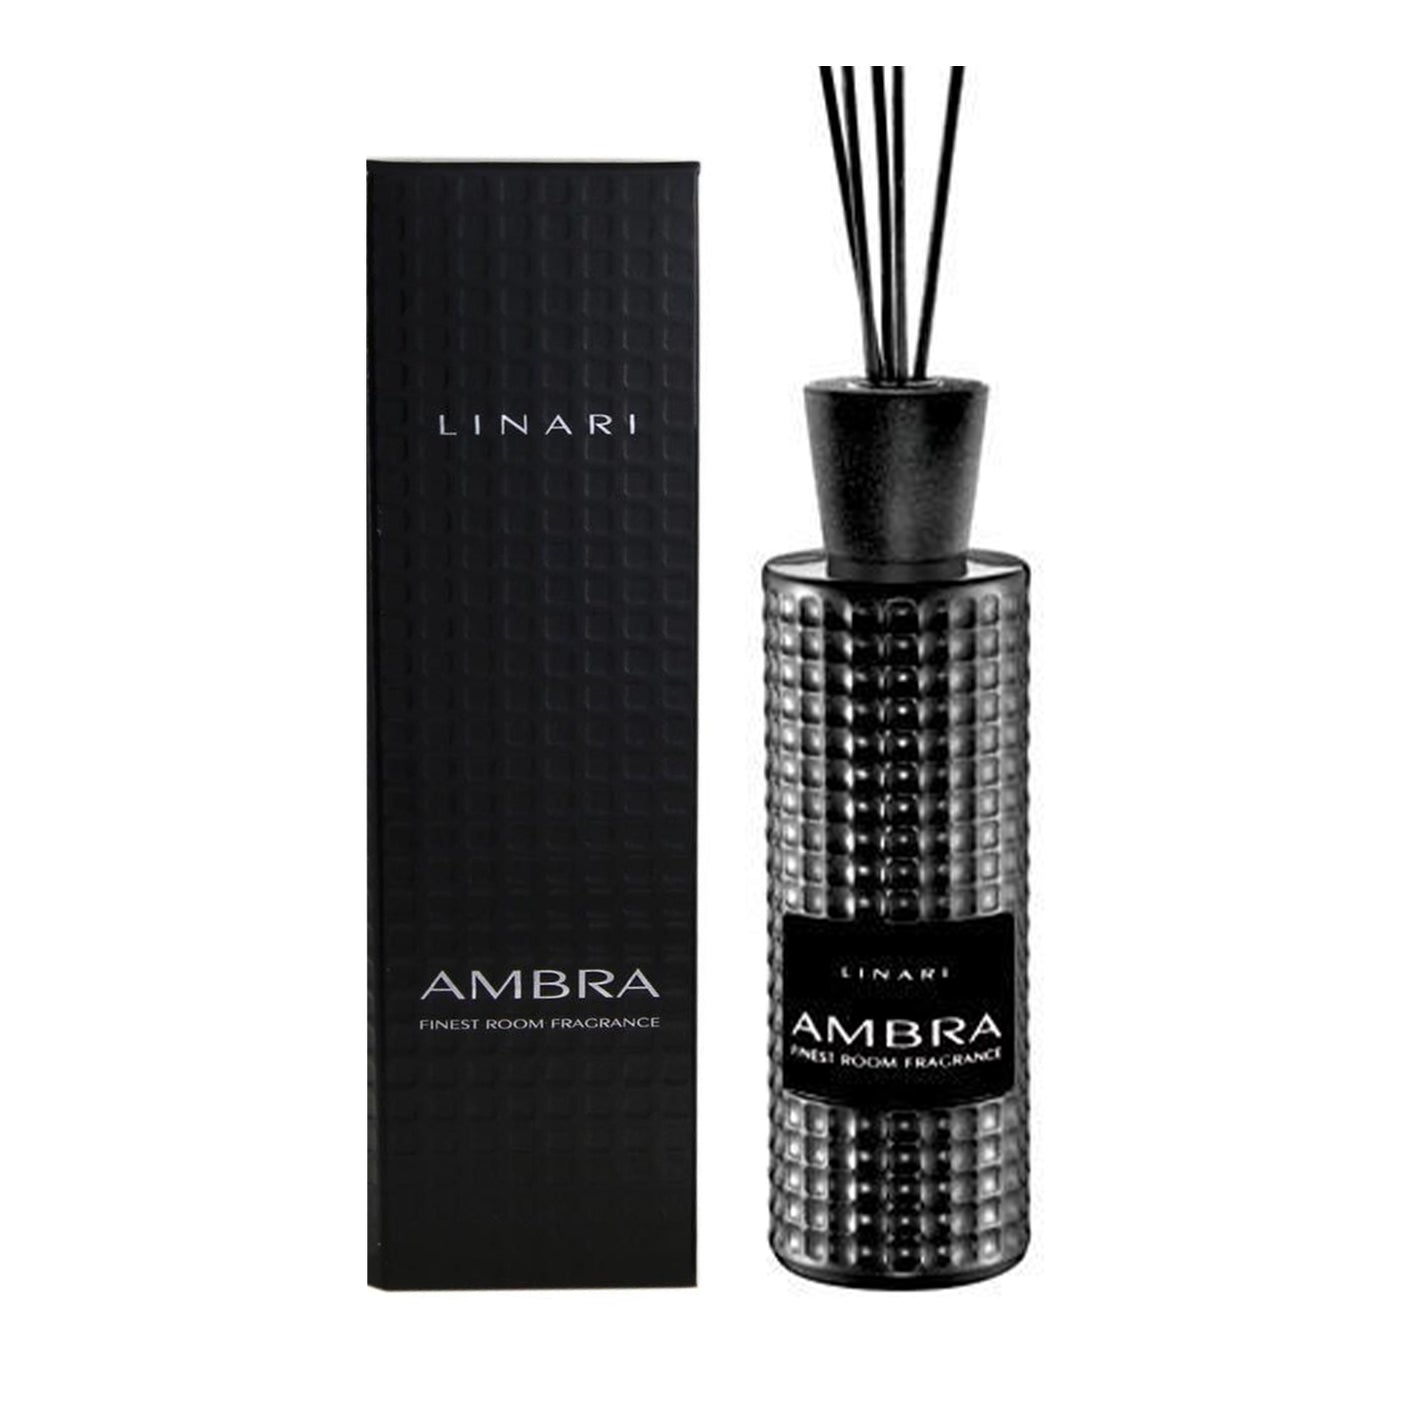 LINARI Ambra Diffuser + Reeds